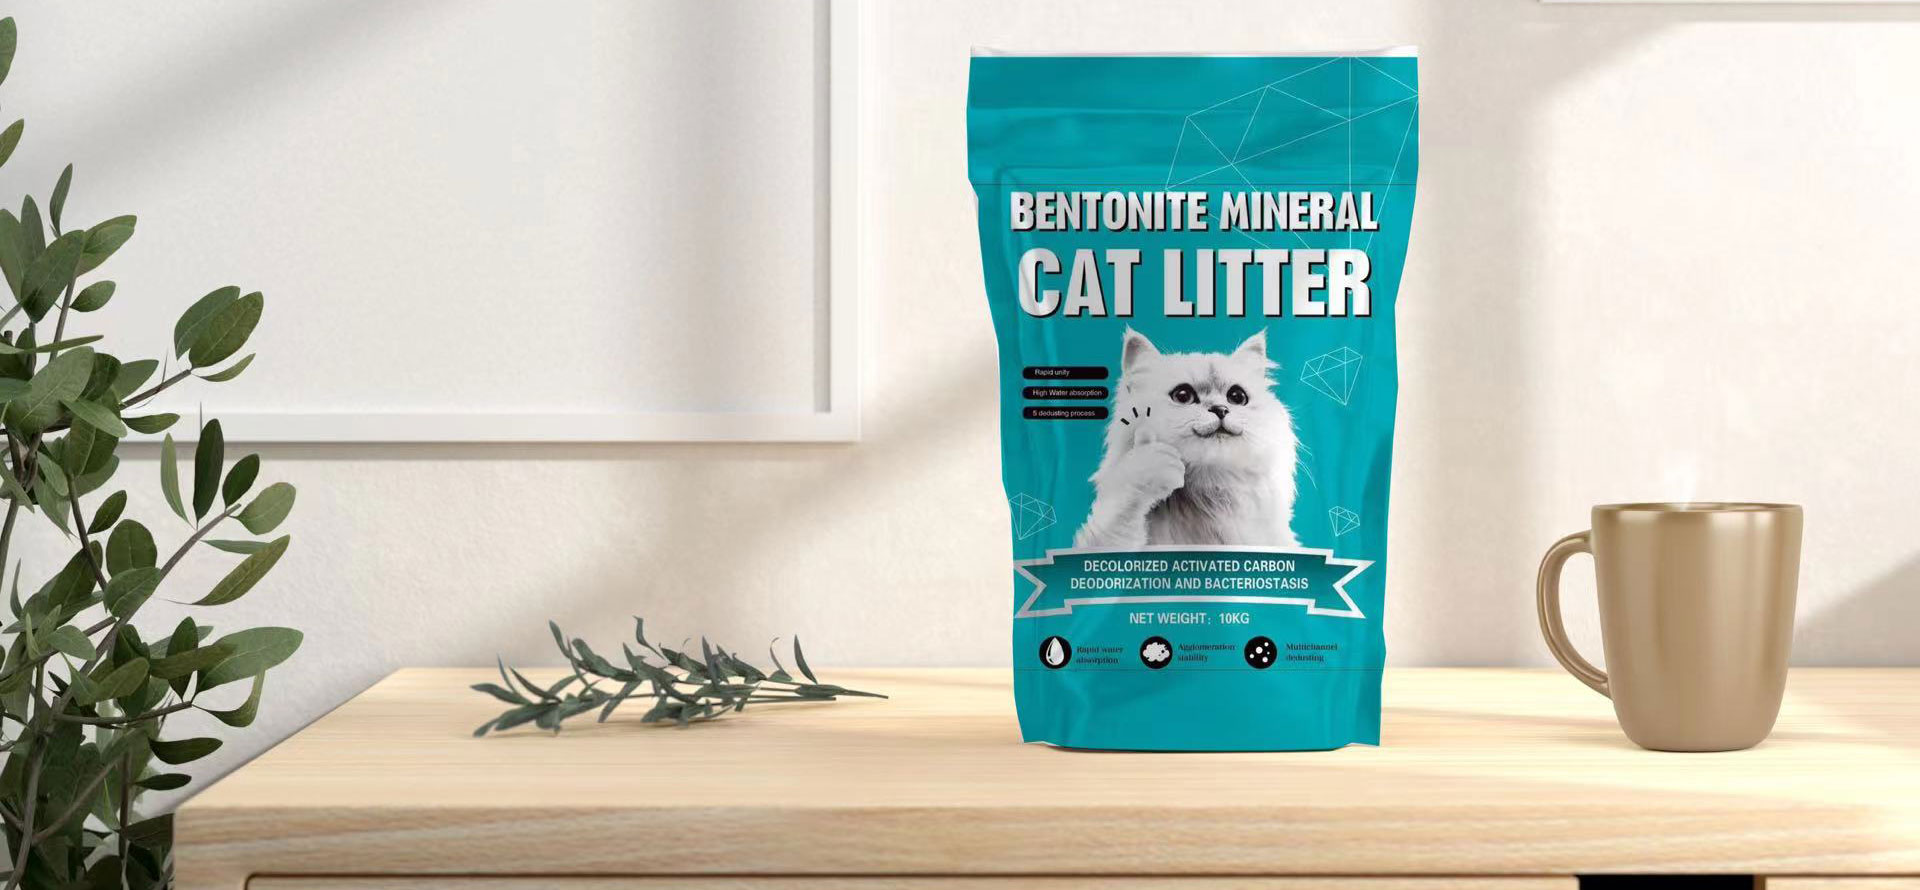 Yintoni-yi-bentonite-cat-litter__2